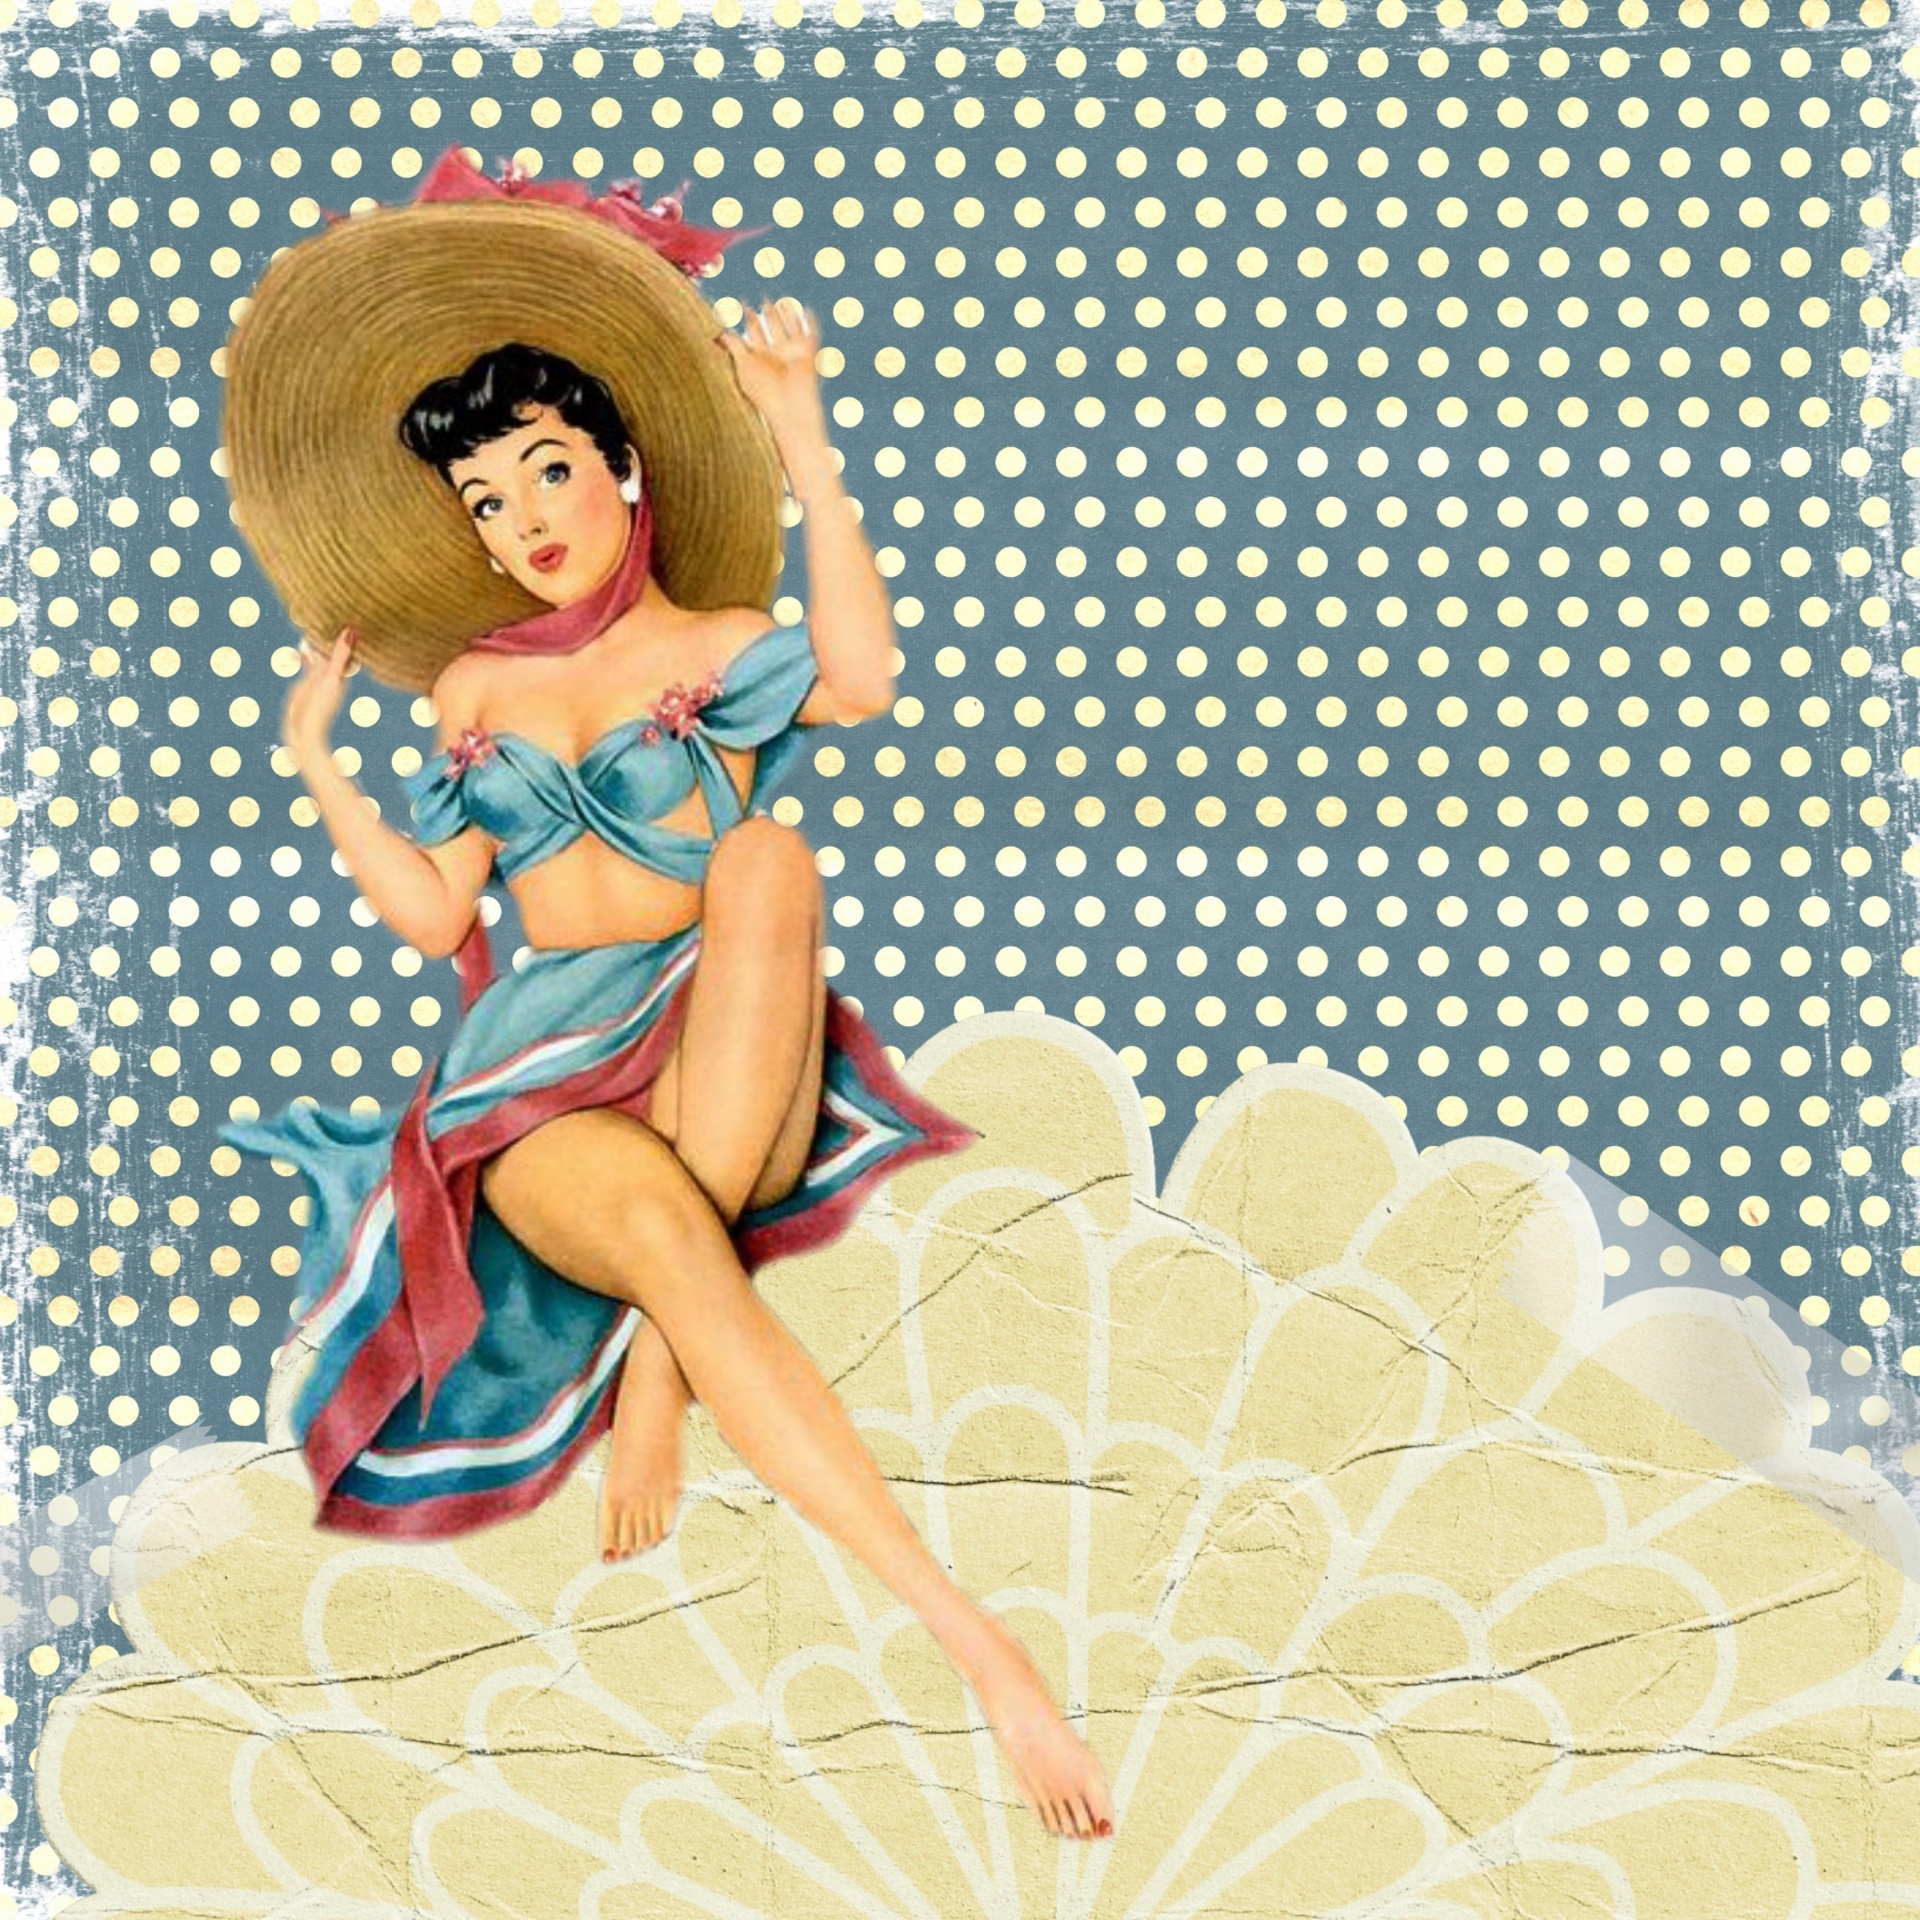 Retro Pin-up Lady Art Collage